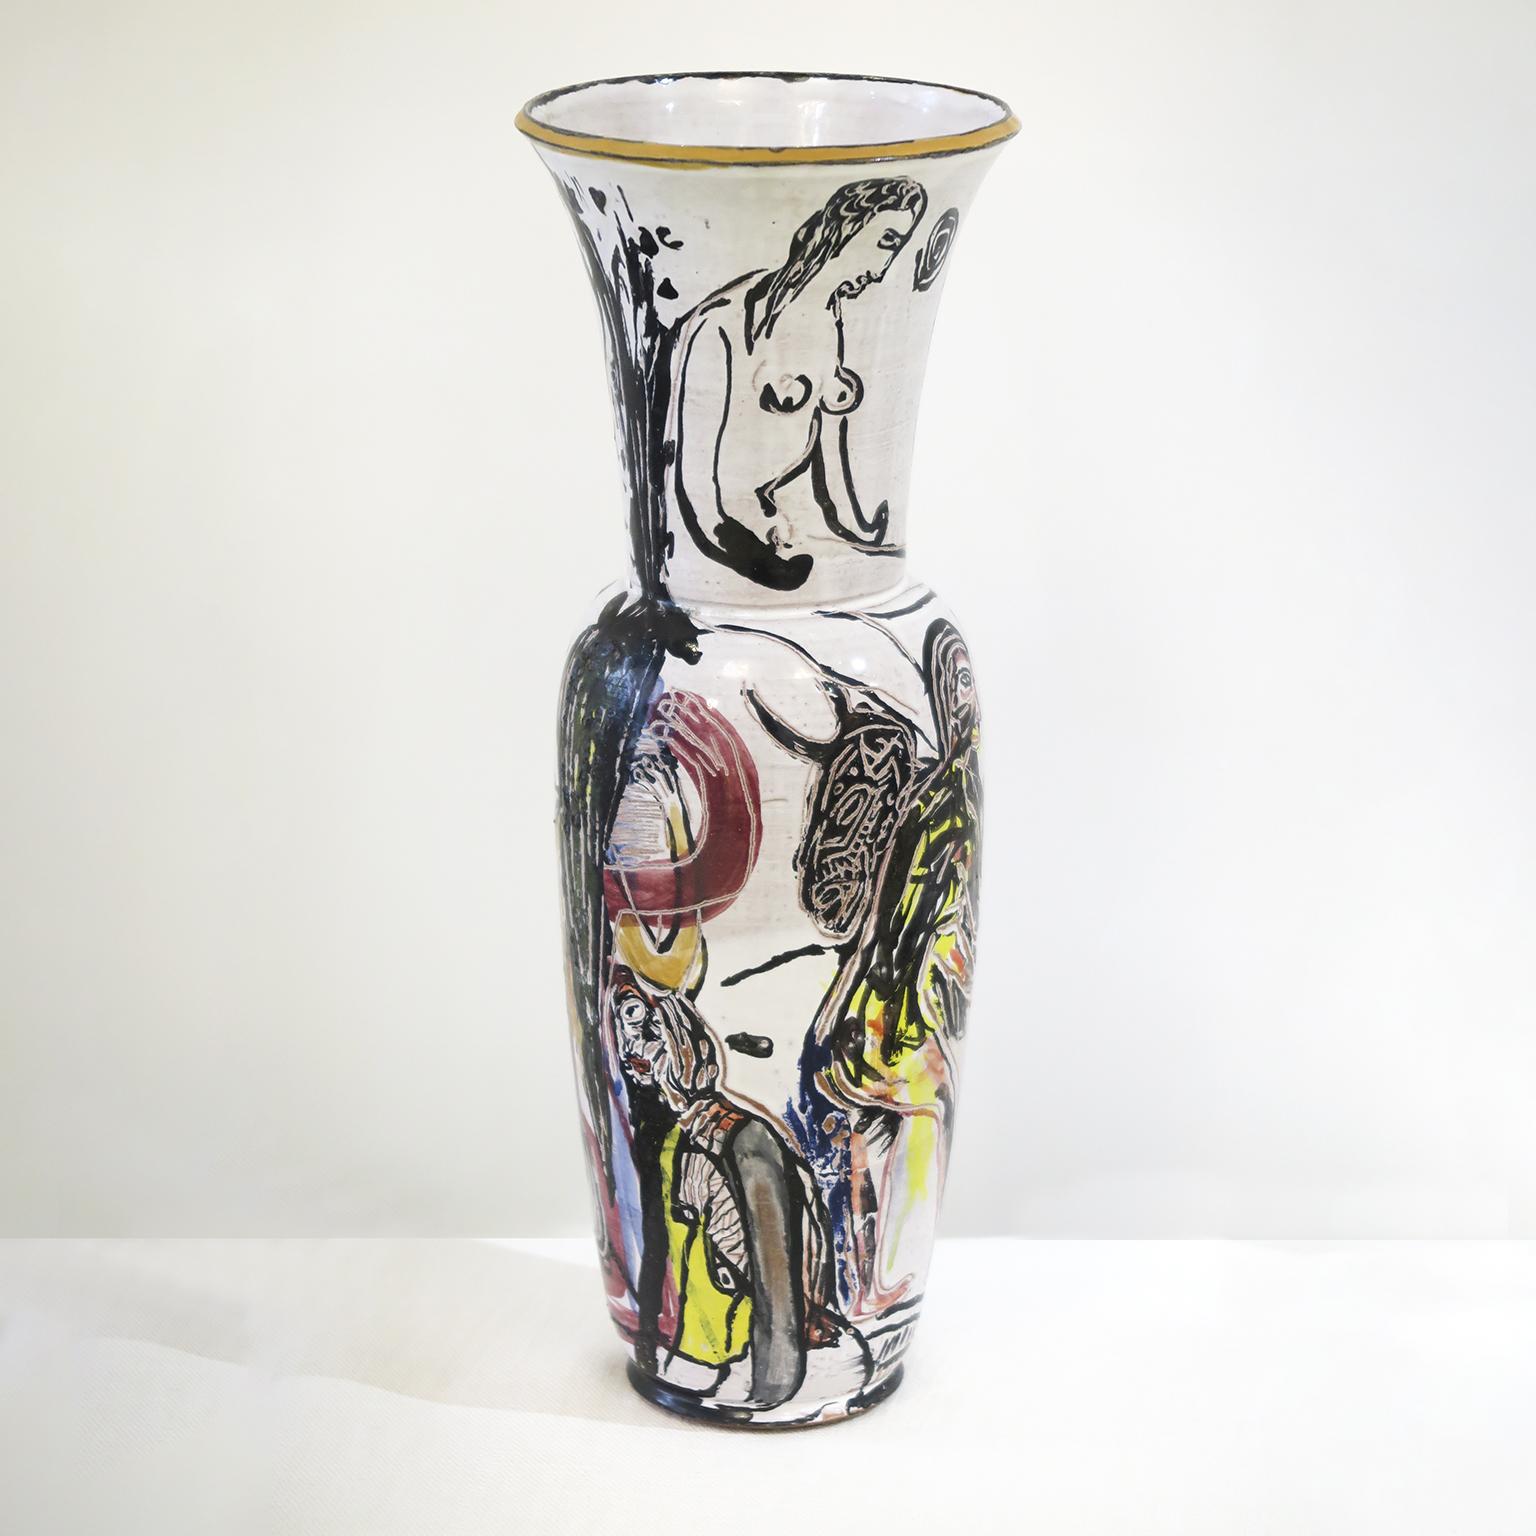 Decorative, figurative ceramic vase by Annette Wanderer, Germany, circa 2010.